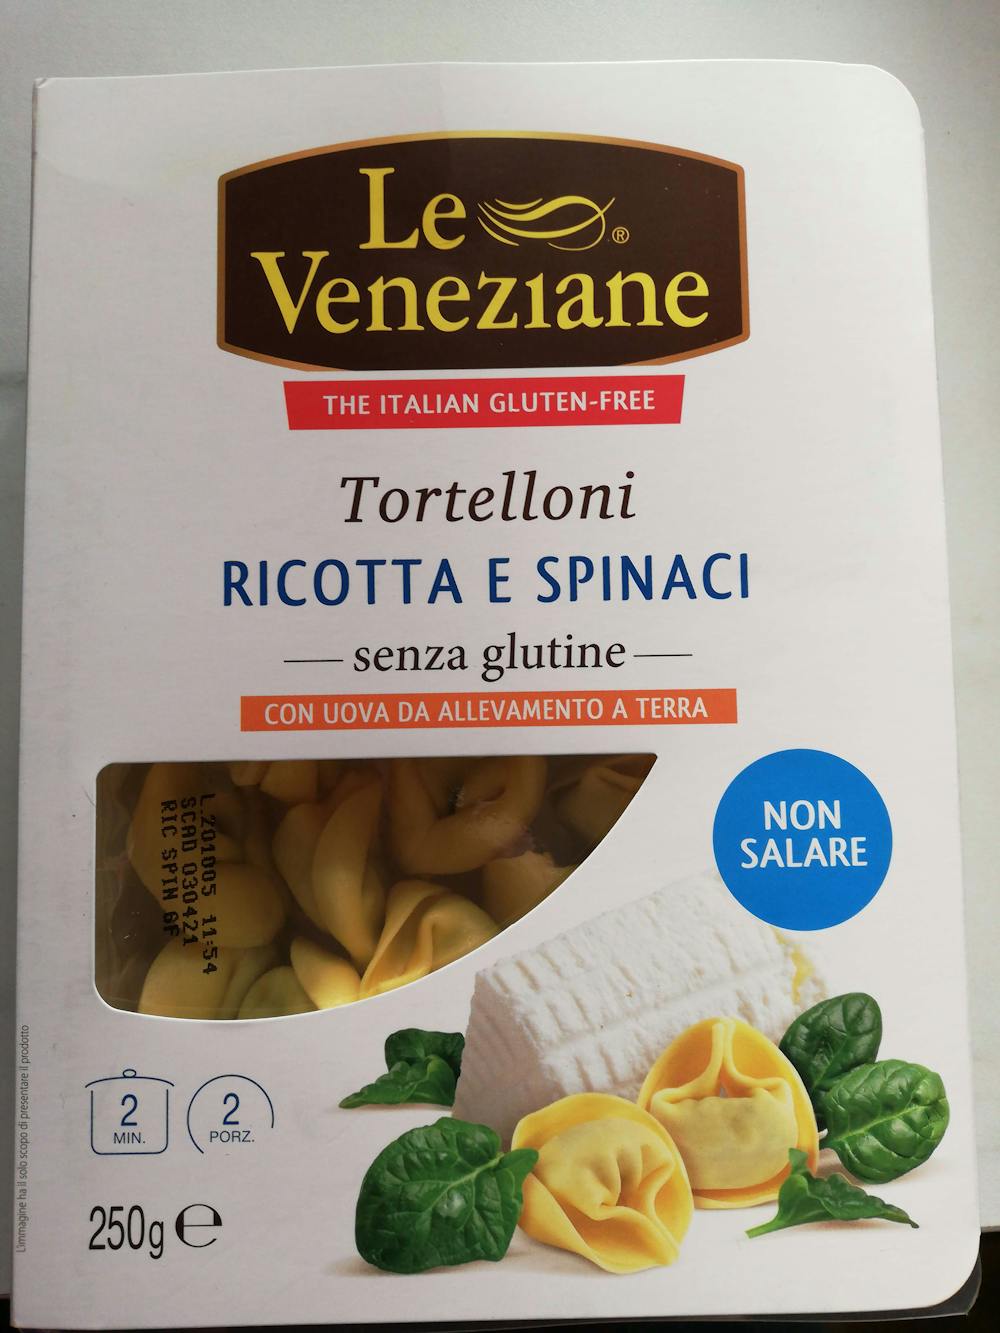 Tortelloni, ricotta e spinaci, Le Veneziane